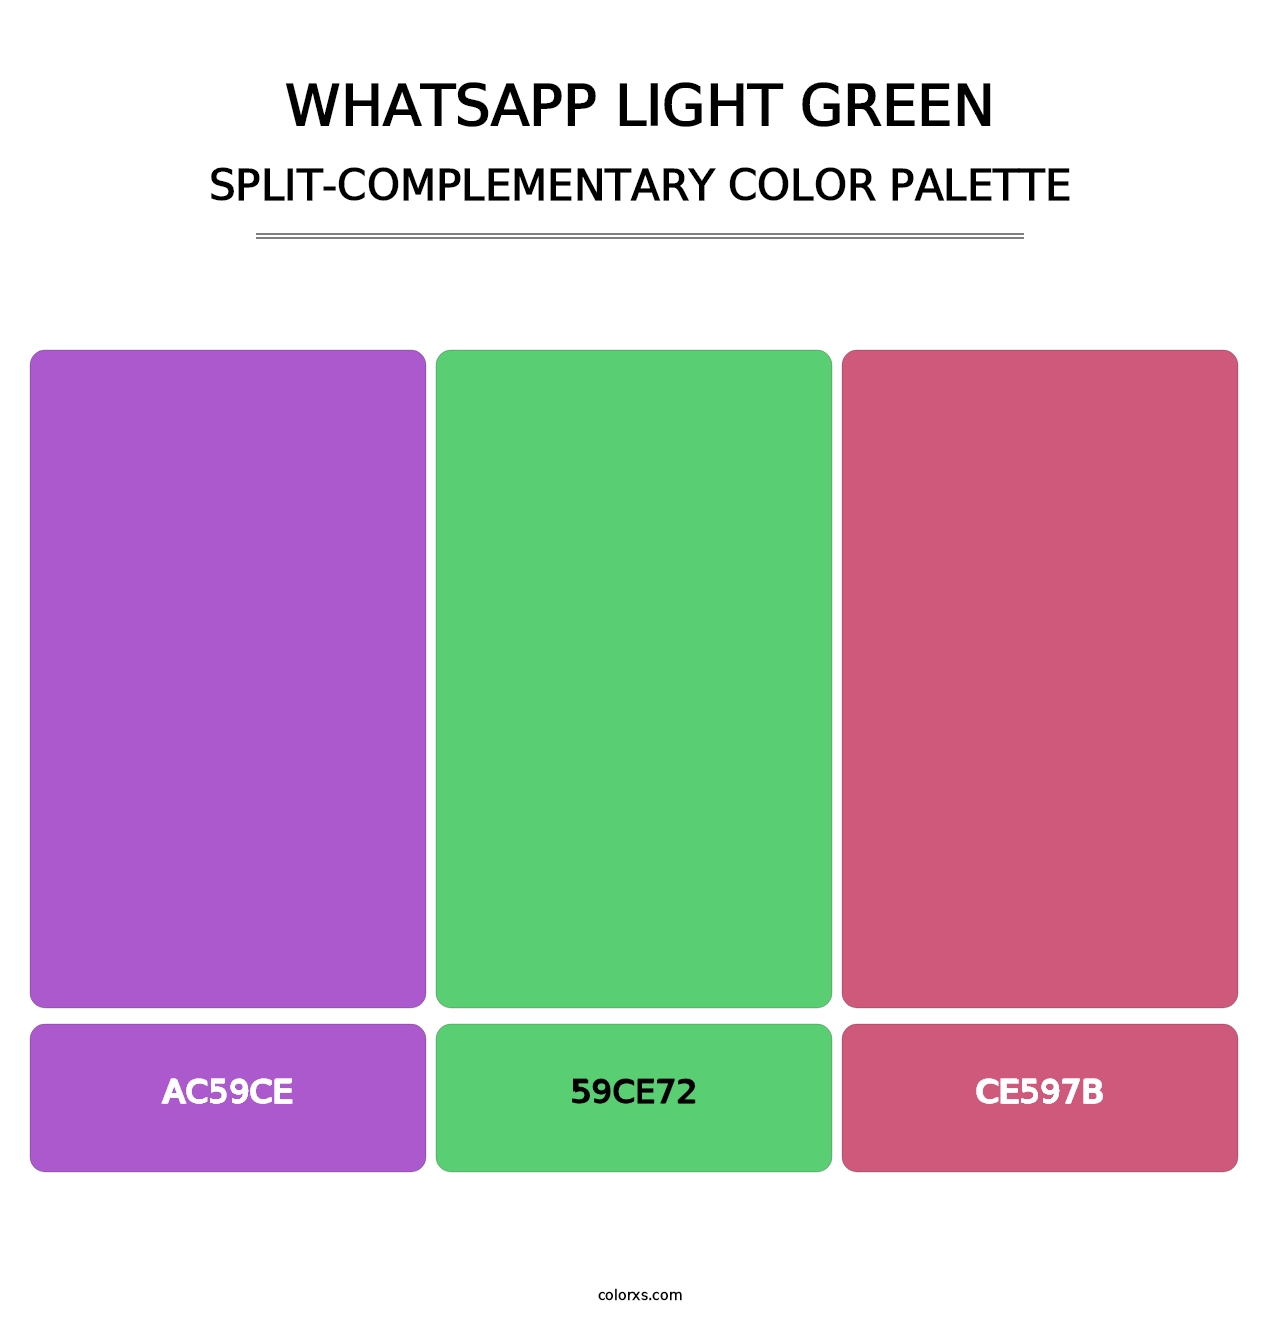 WhatsApp Light Green - Split-Complementary Color Palette